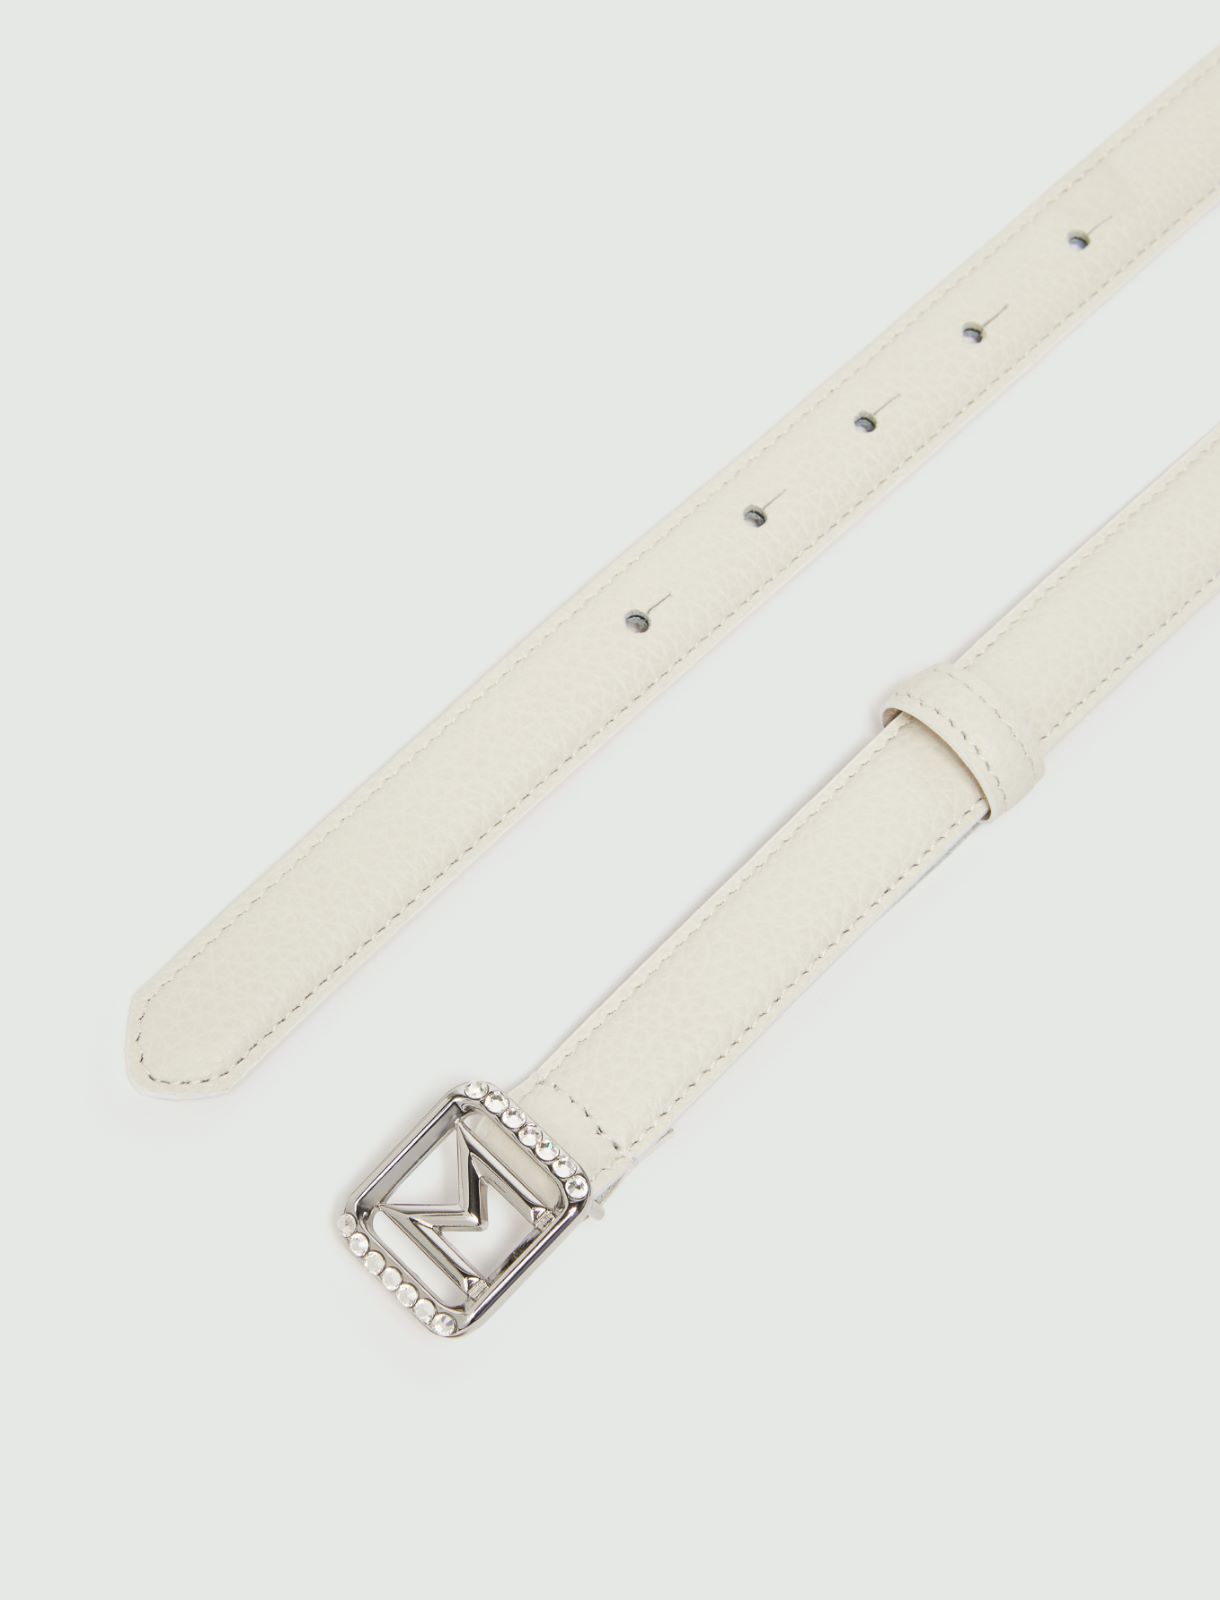 Leather belt - White - Marina Rinaldi - 2